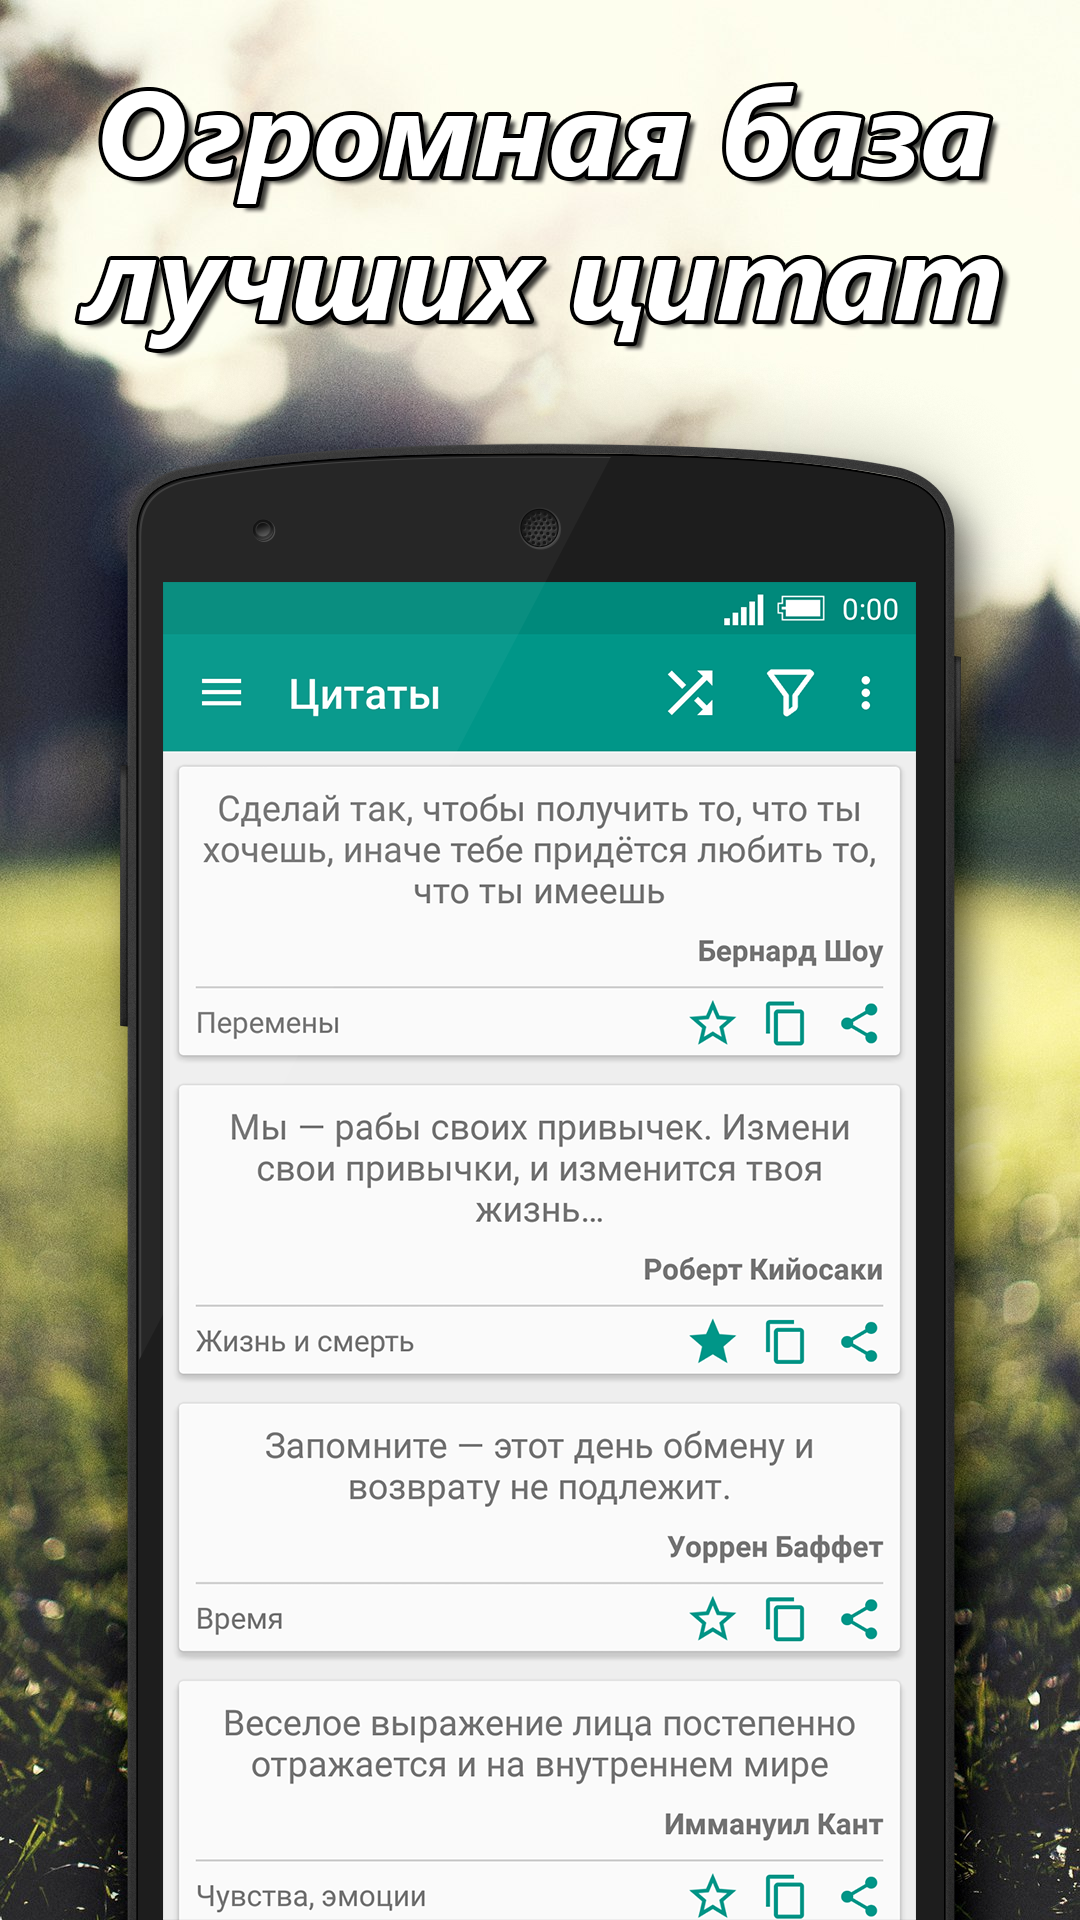 Android application Цитаты (Pro) screenshort